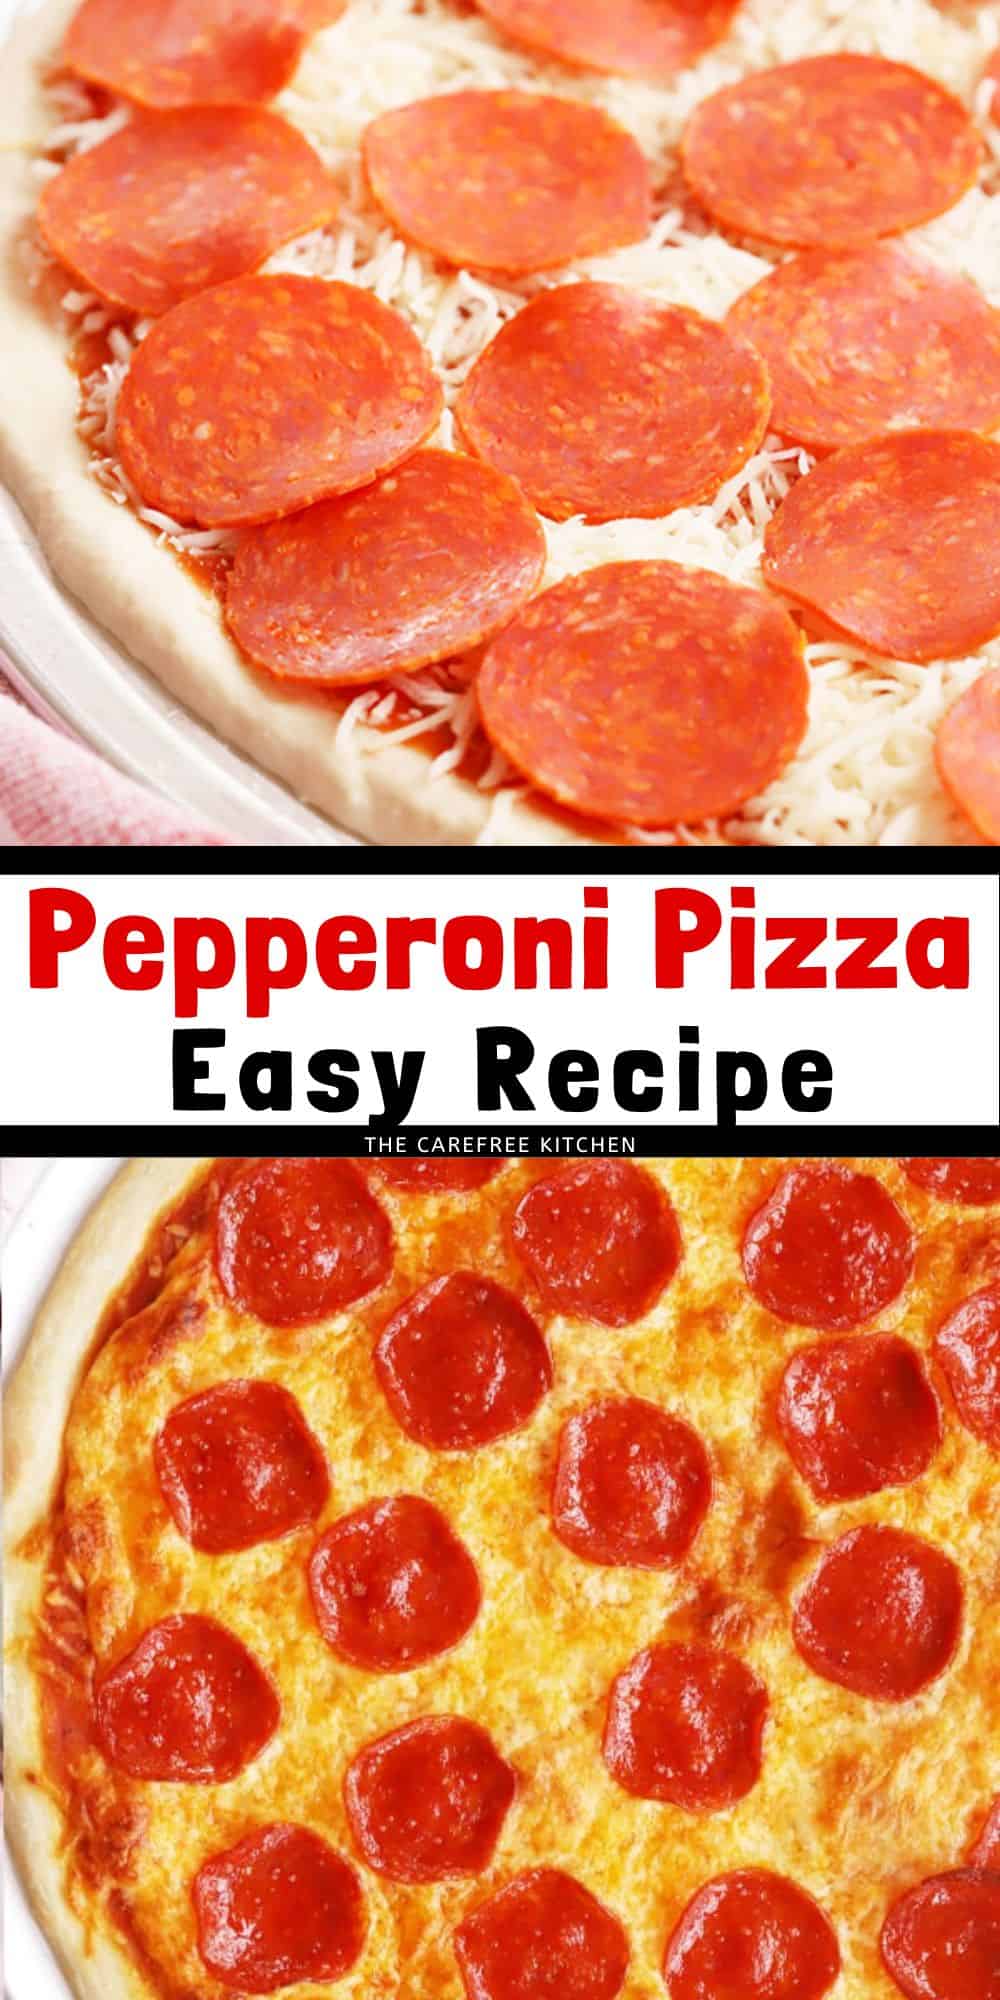 Basic Pizza Dough Recipe - The Carefree Kitchen